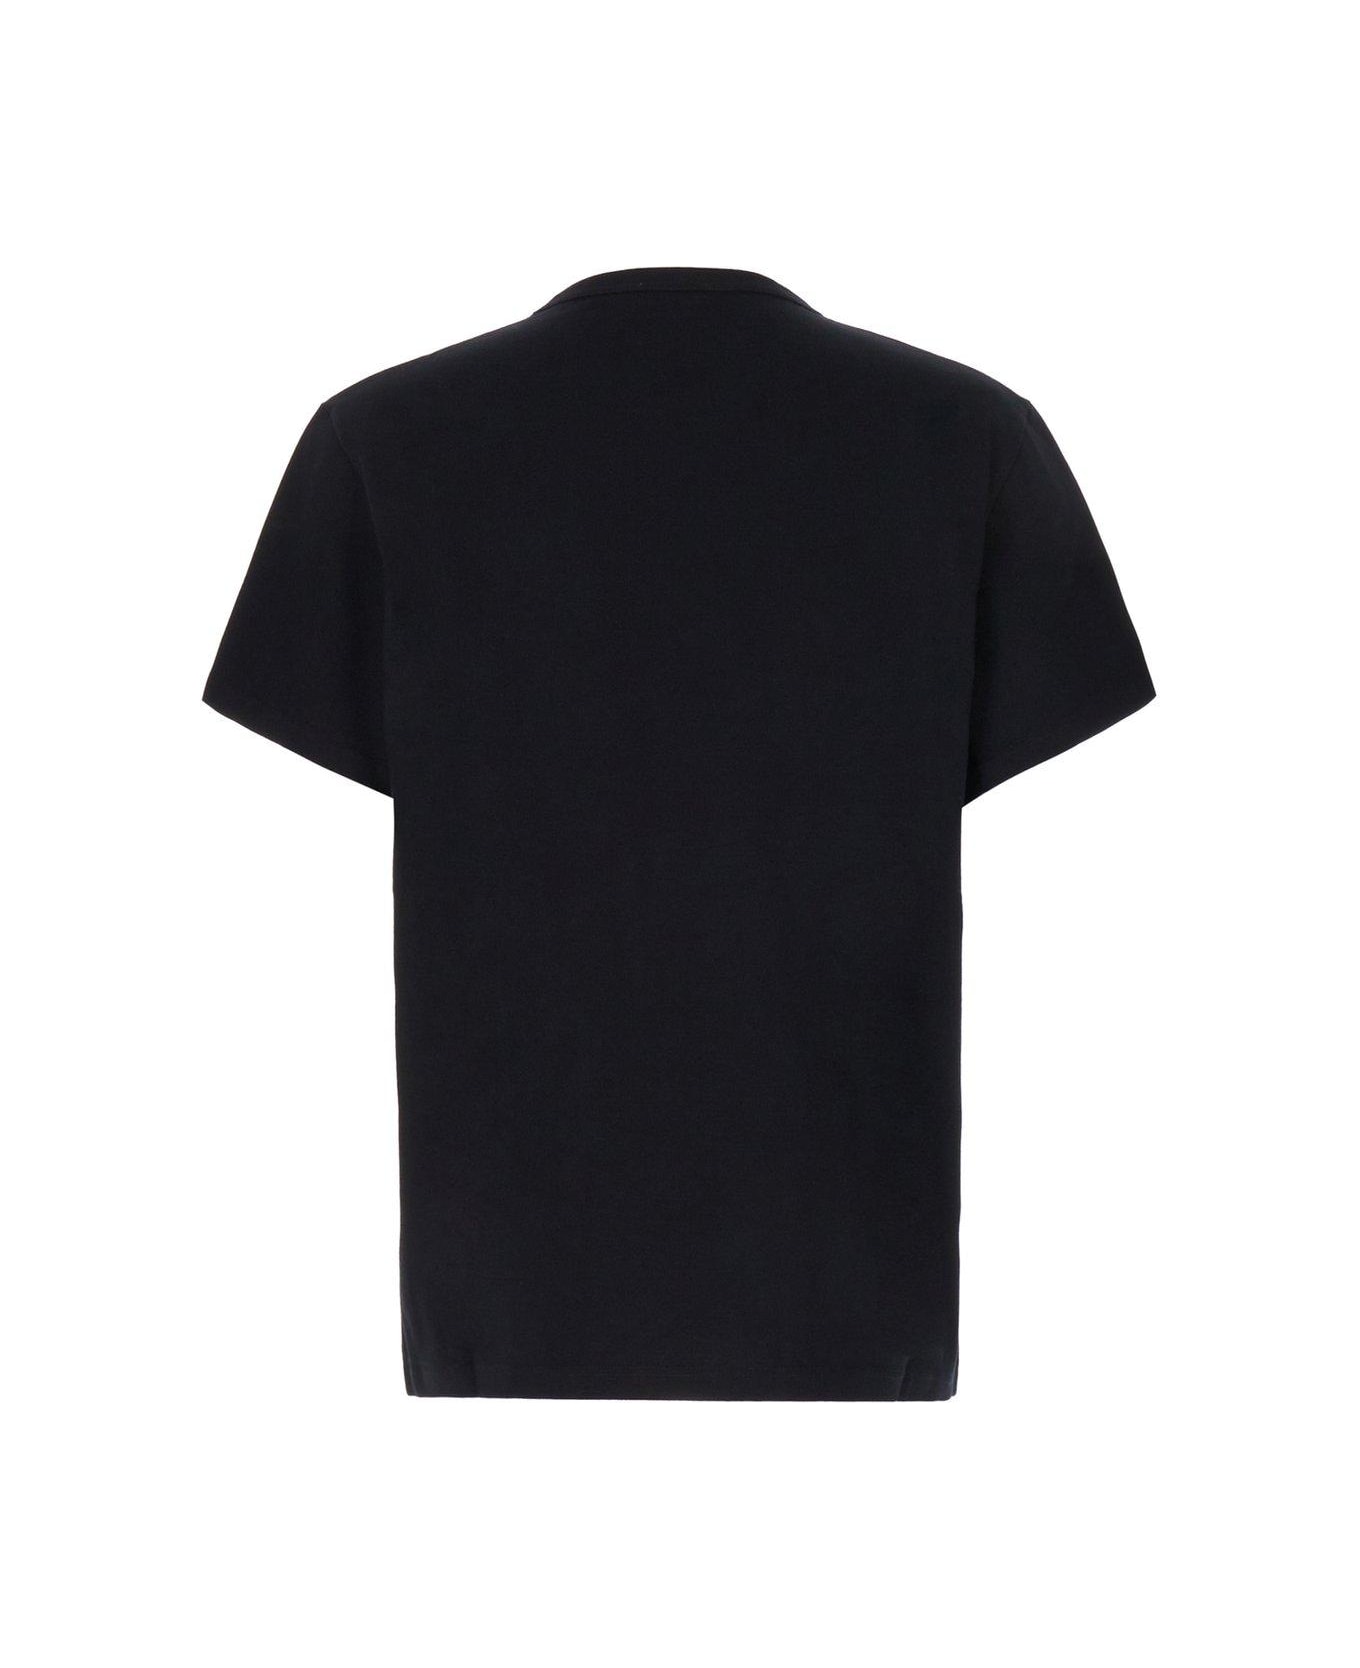 Alexander McQueen Embossed Skull T-shirt - Black